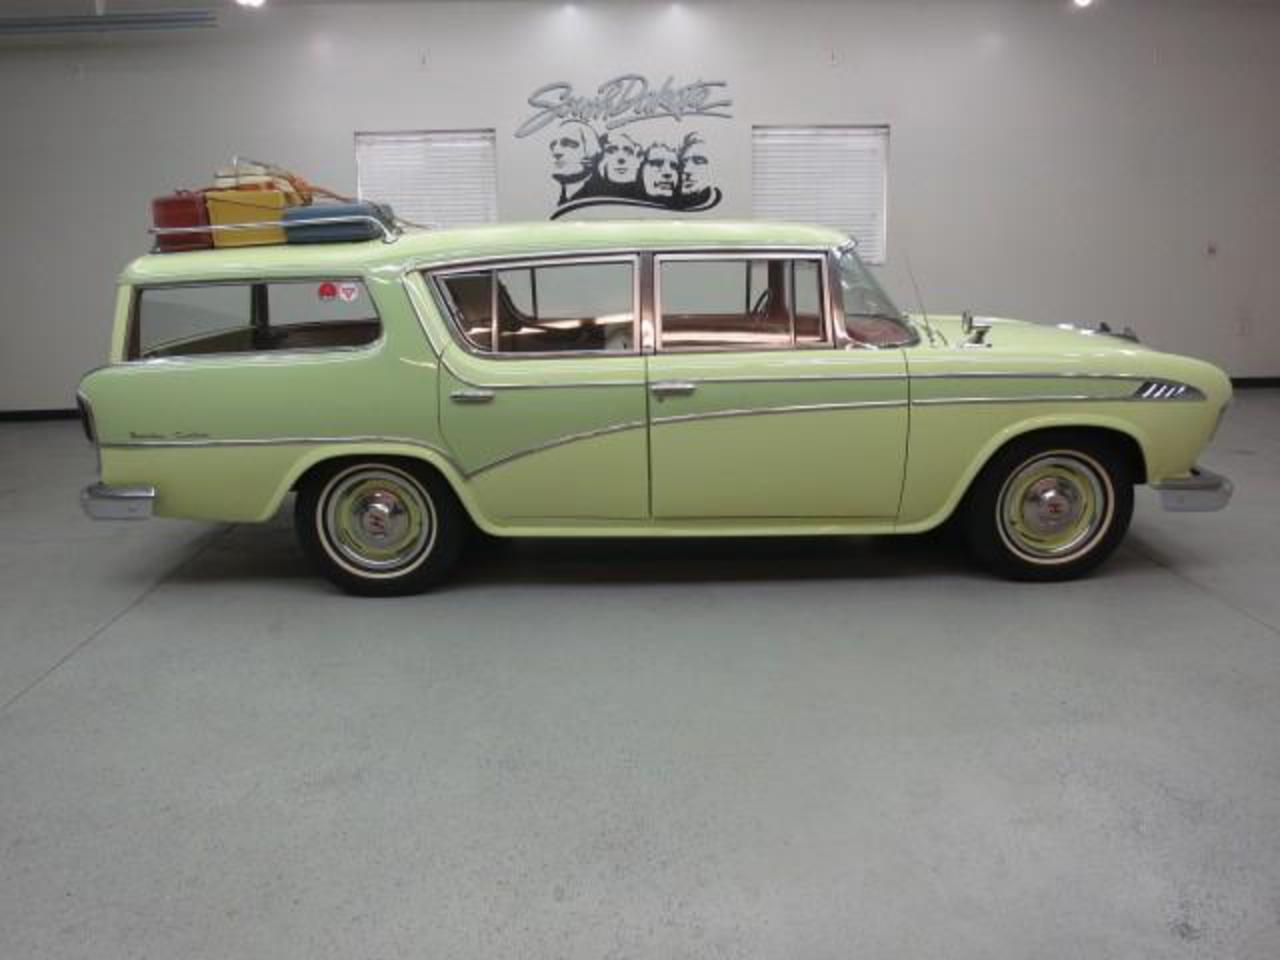 1956 Hudson RAMBLER, Used Cars For Sale - Carsforsale.